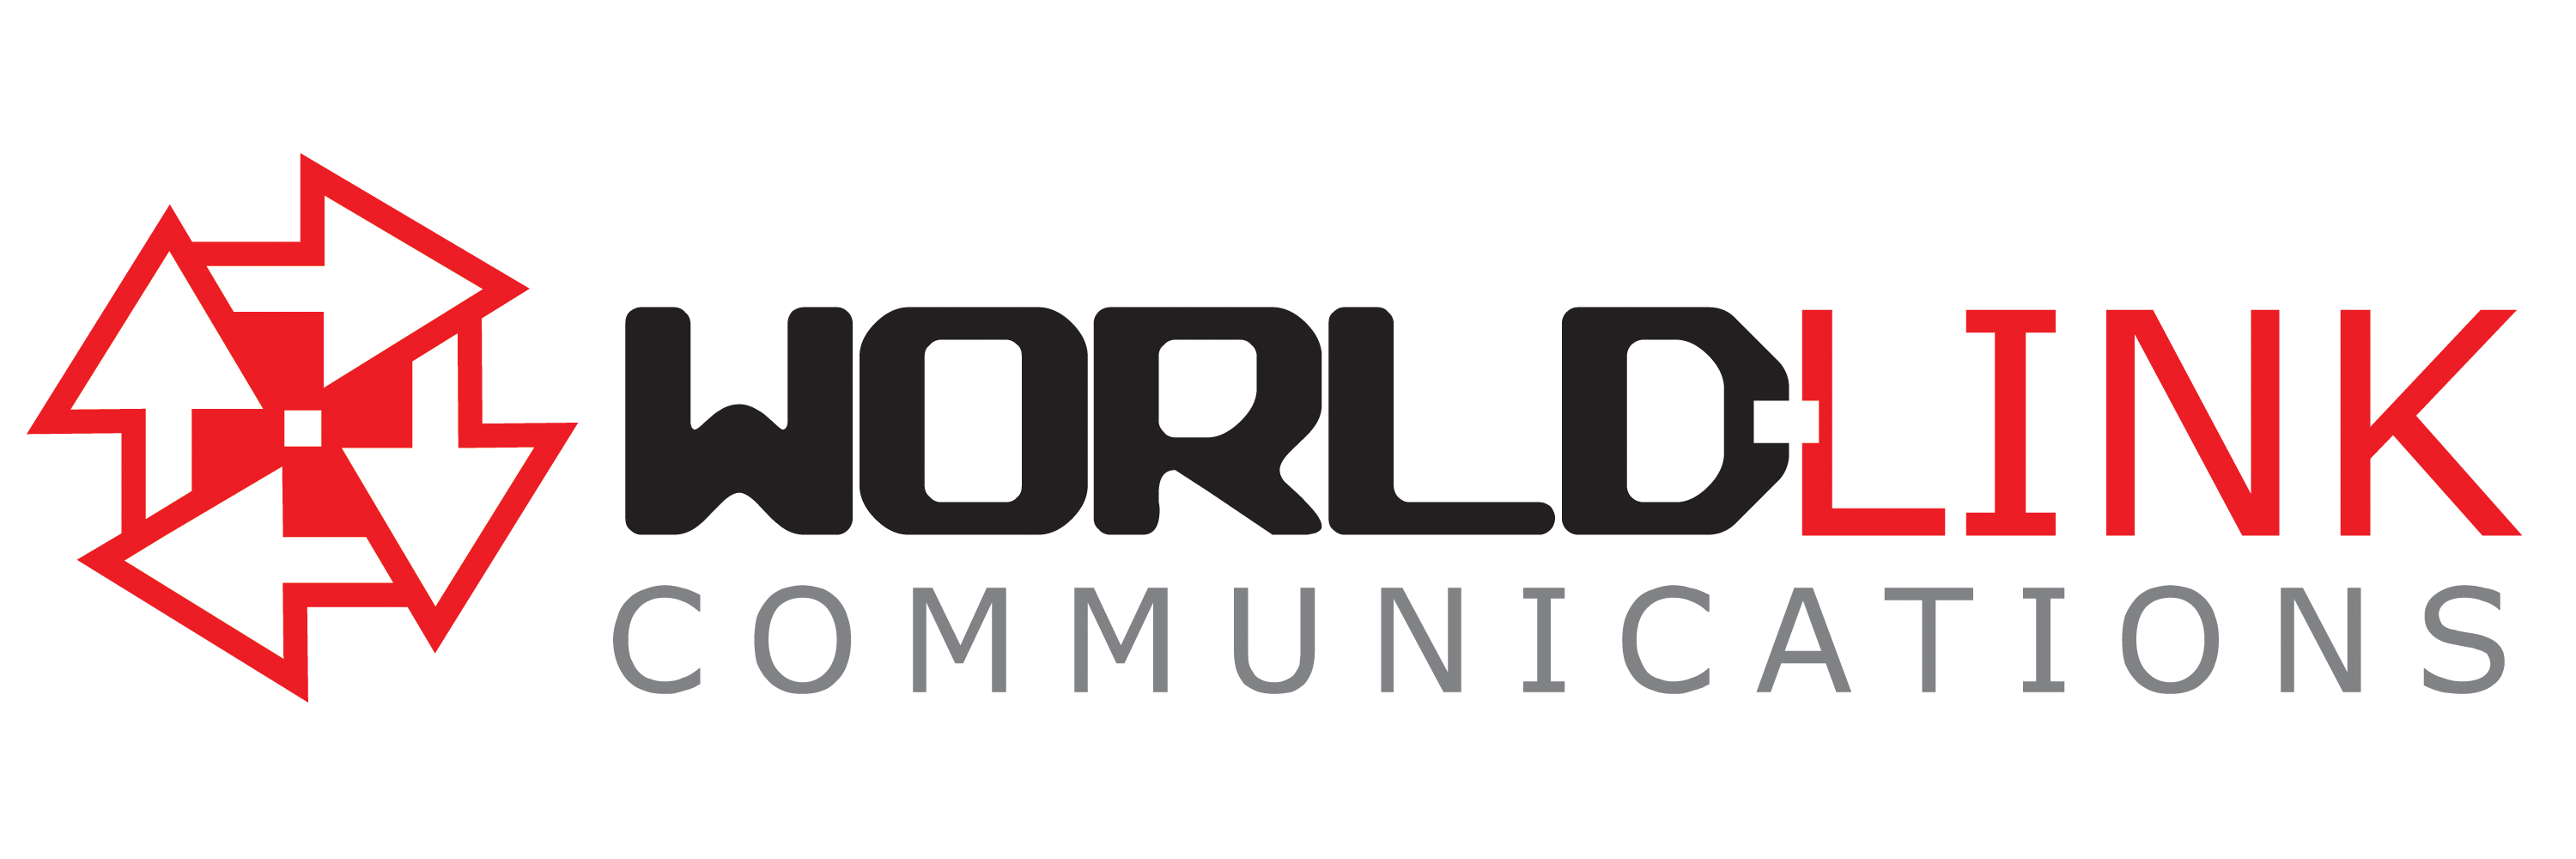 companylogo_worldlink.png